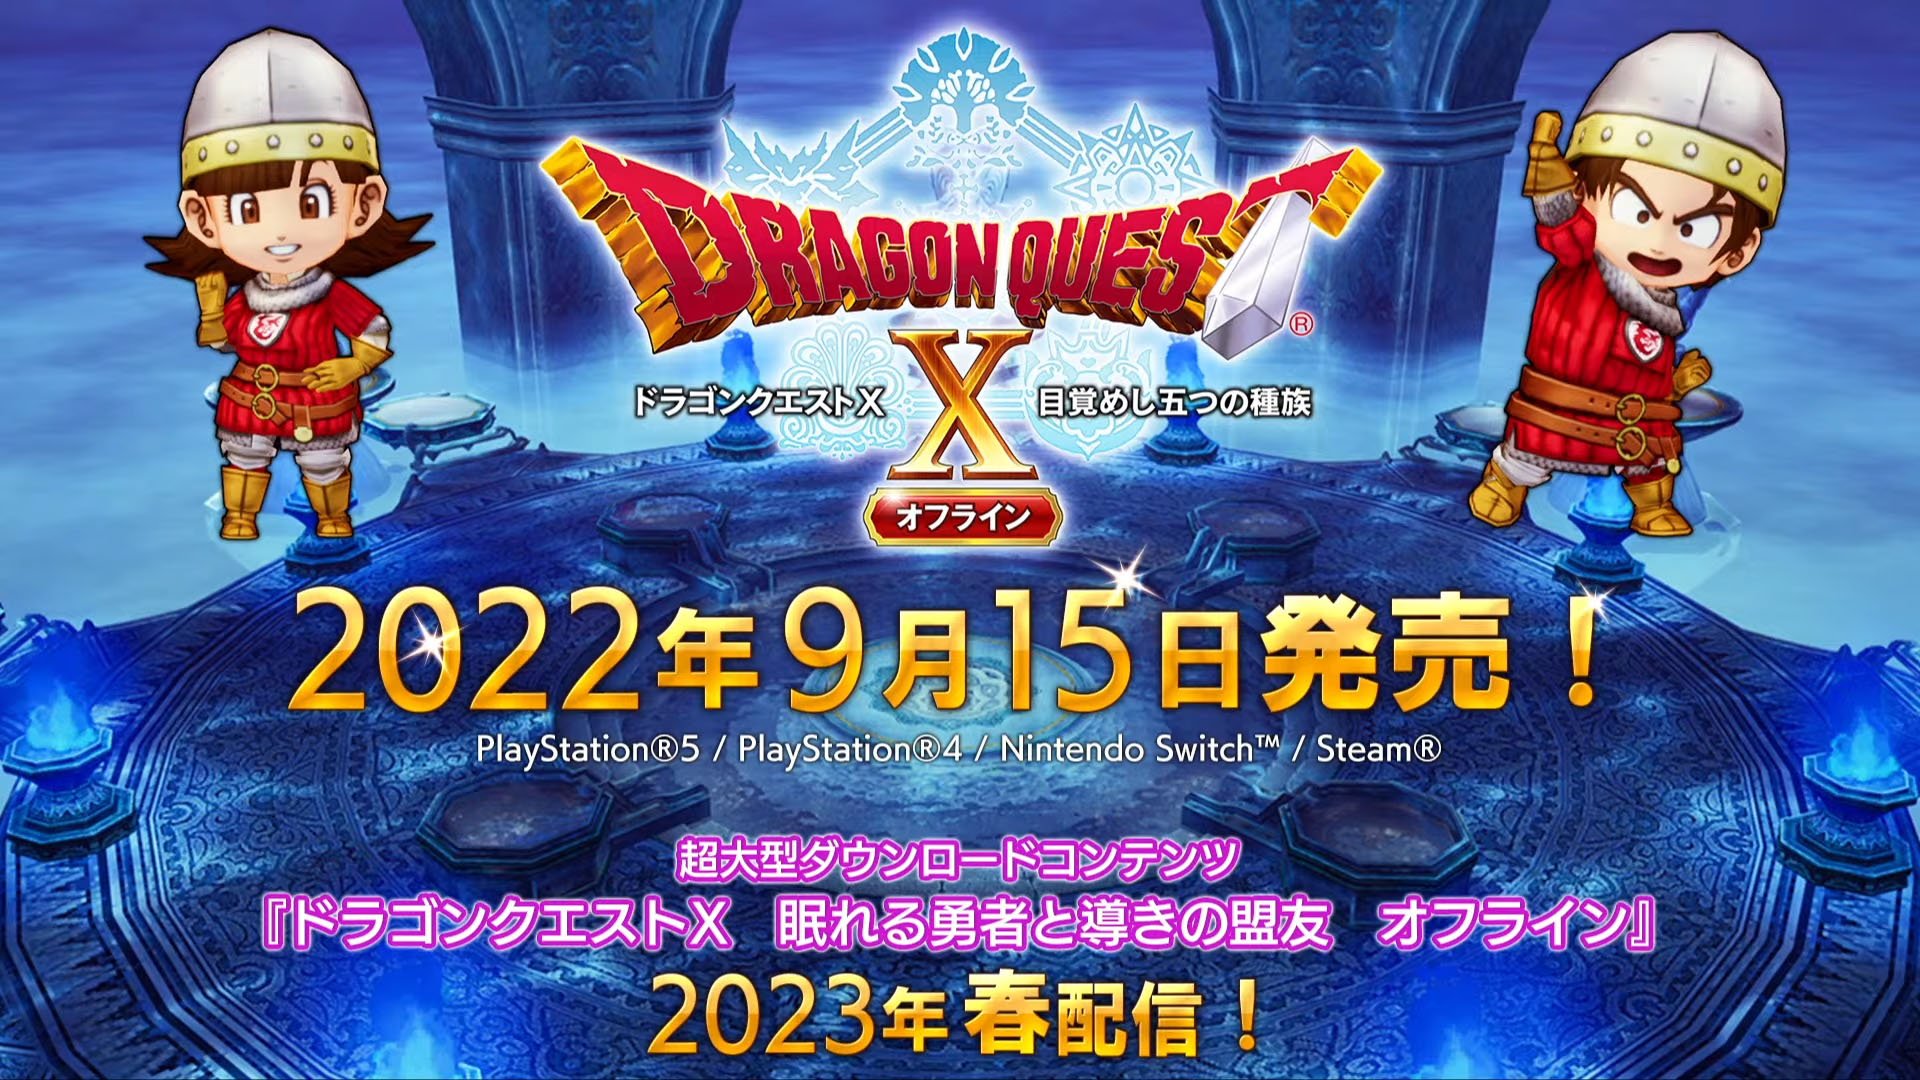 Dragon Quest Walk launches September 12 in Japan - Gematsu